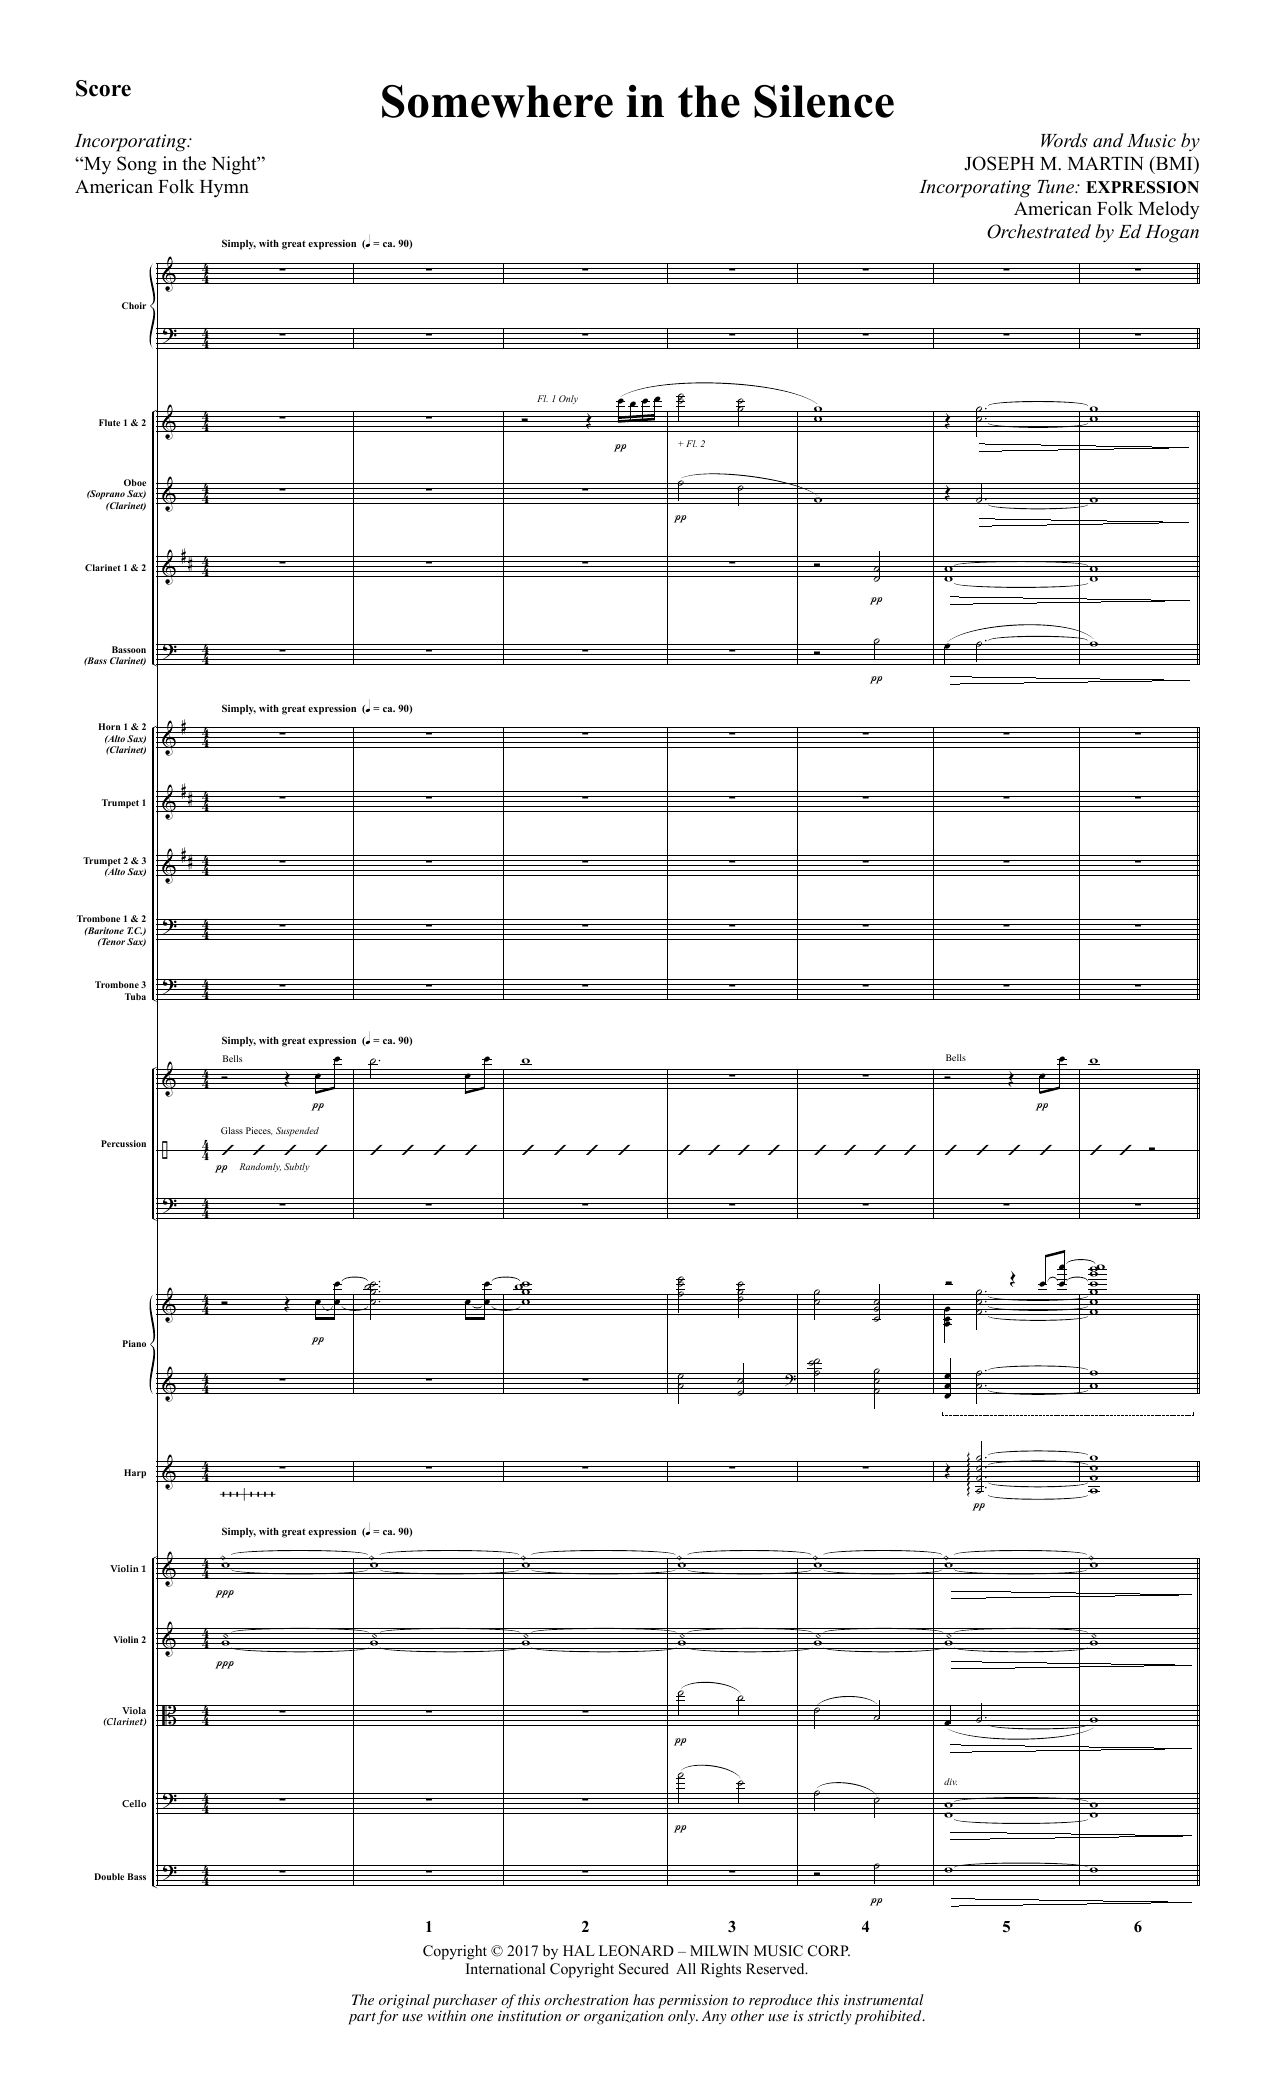 Download Joseph M. Martin Somewhere in the Silence - Full Score Sheet Music